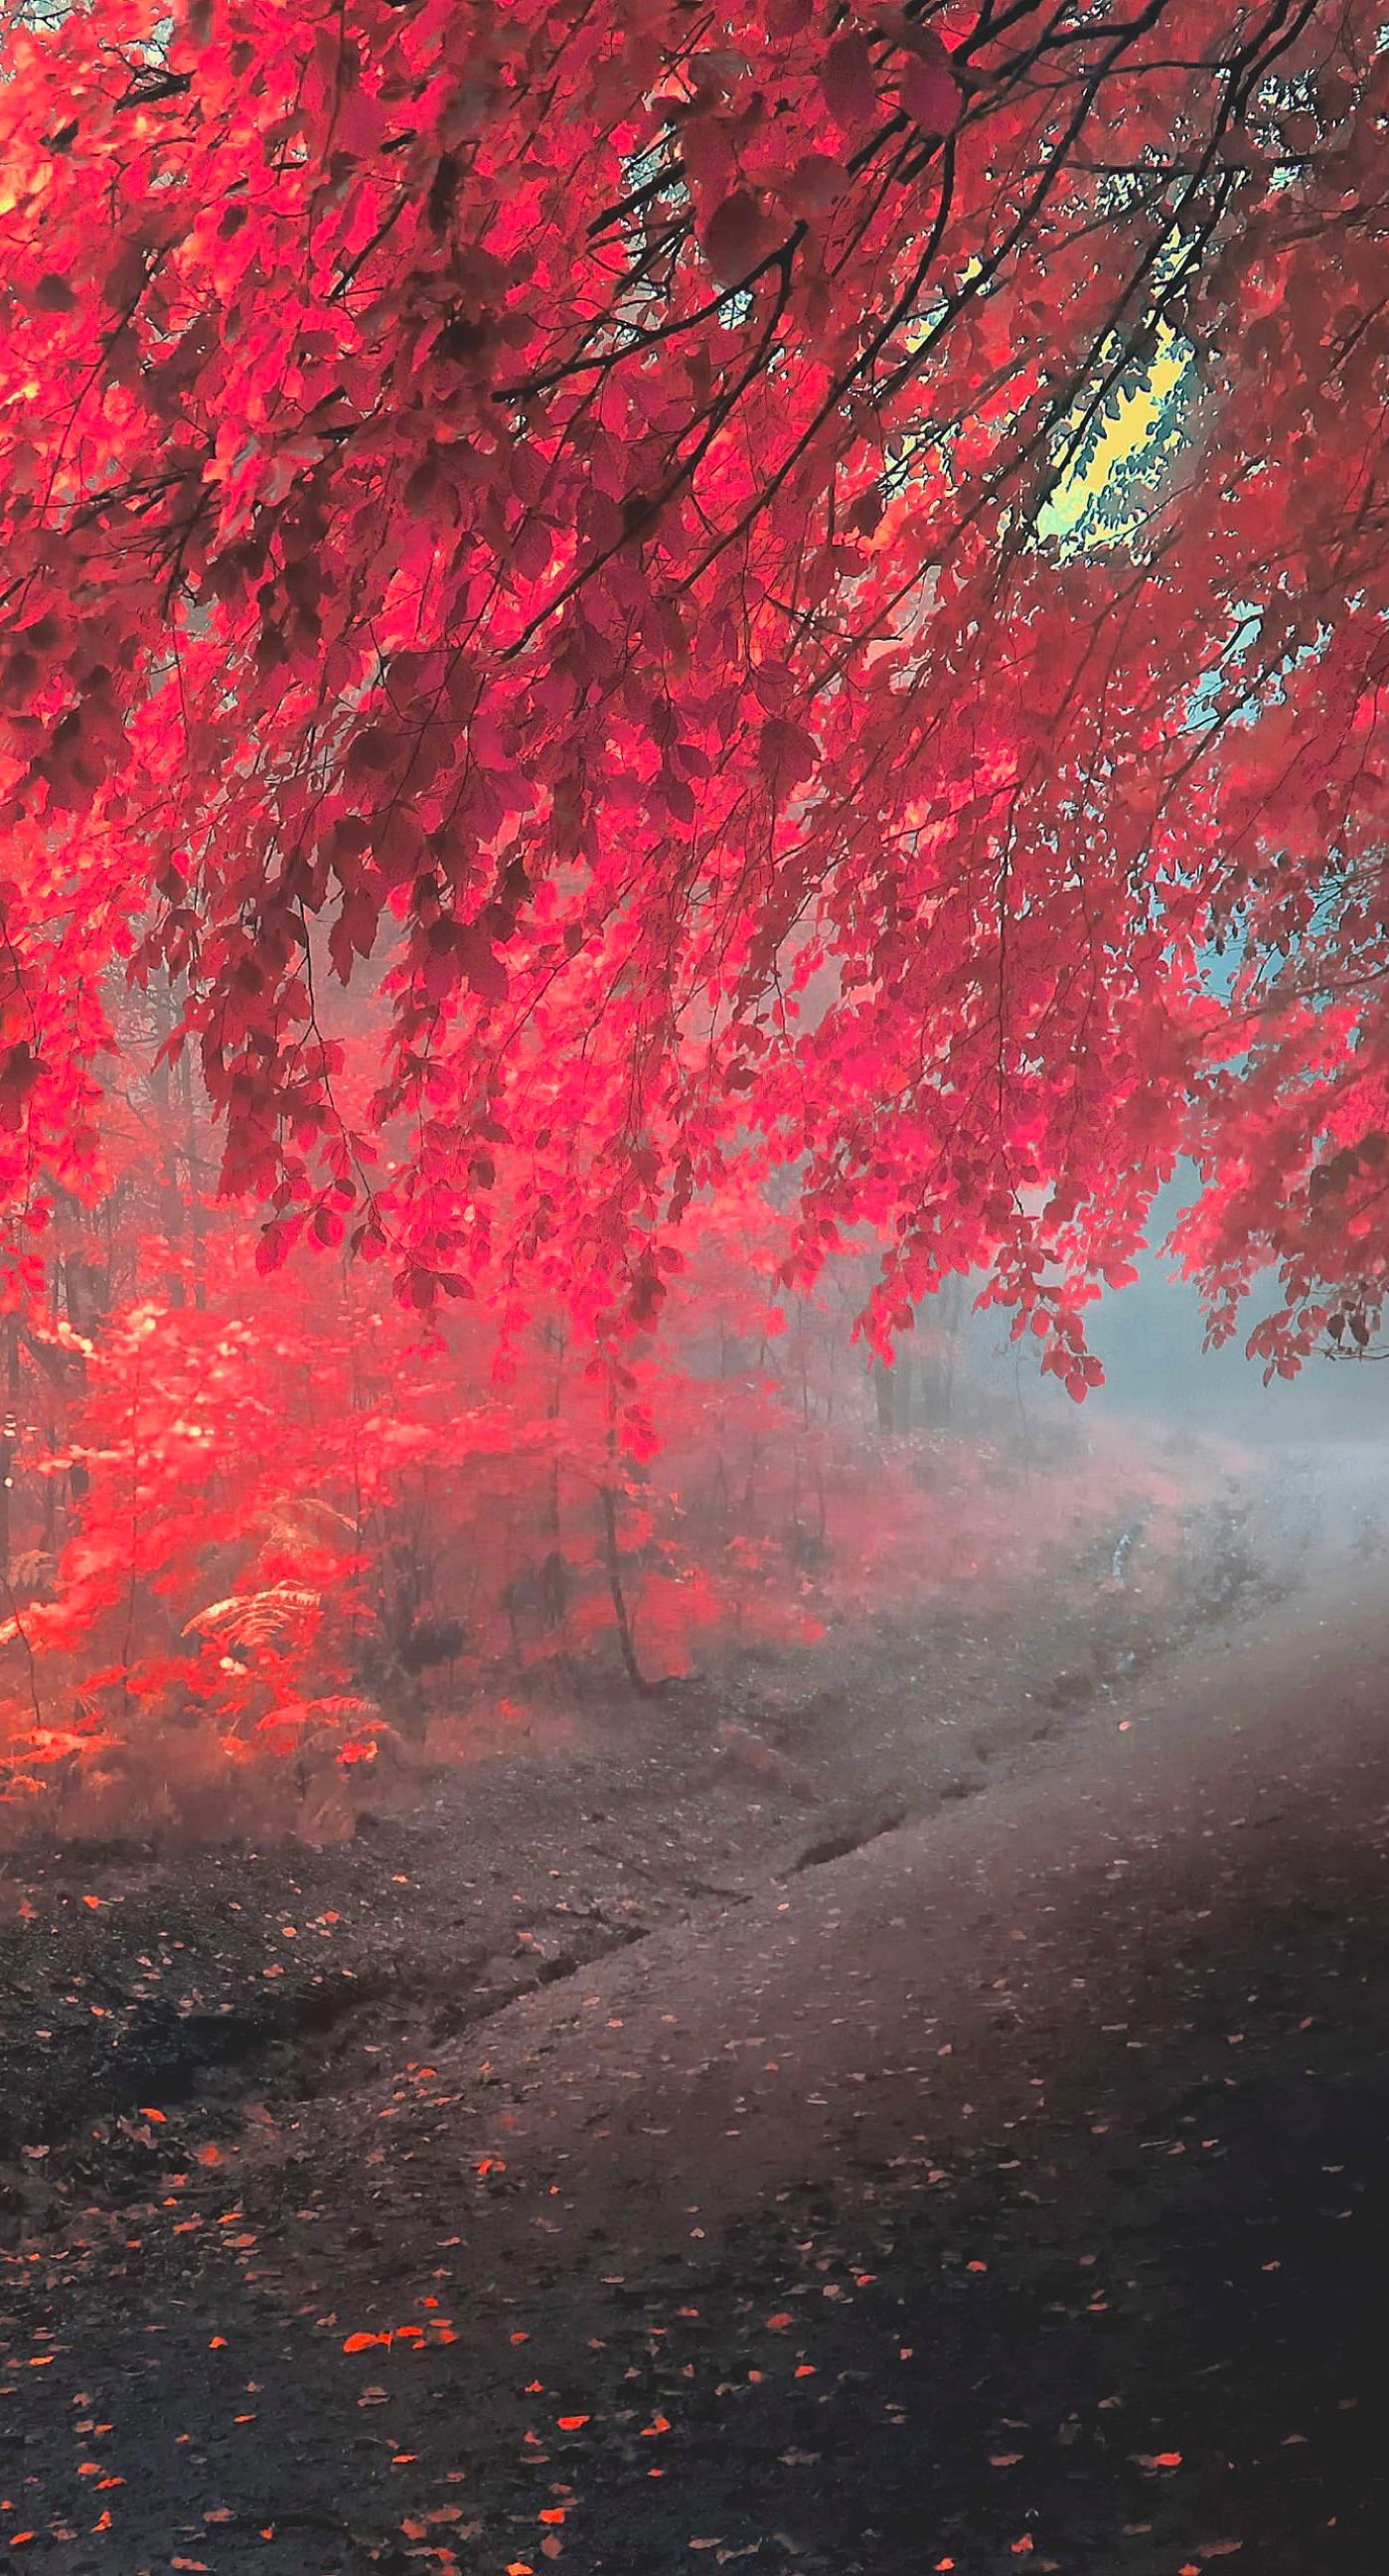 Landscape autumn leaves red | wallpaper.sc iPhone6sPlus